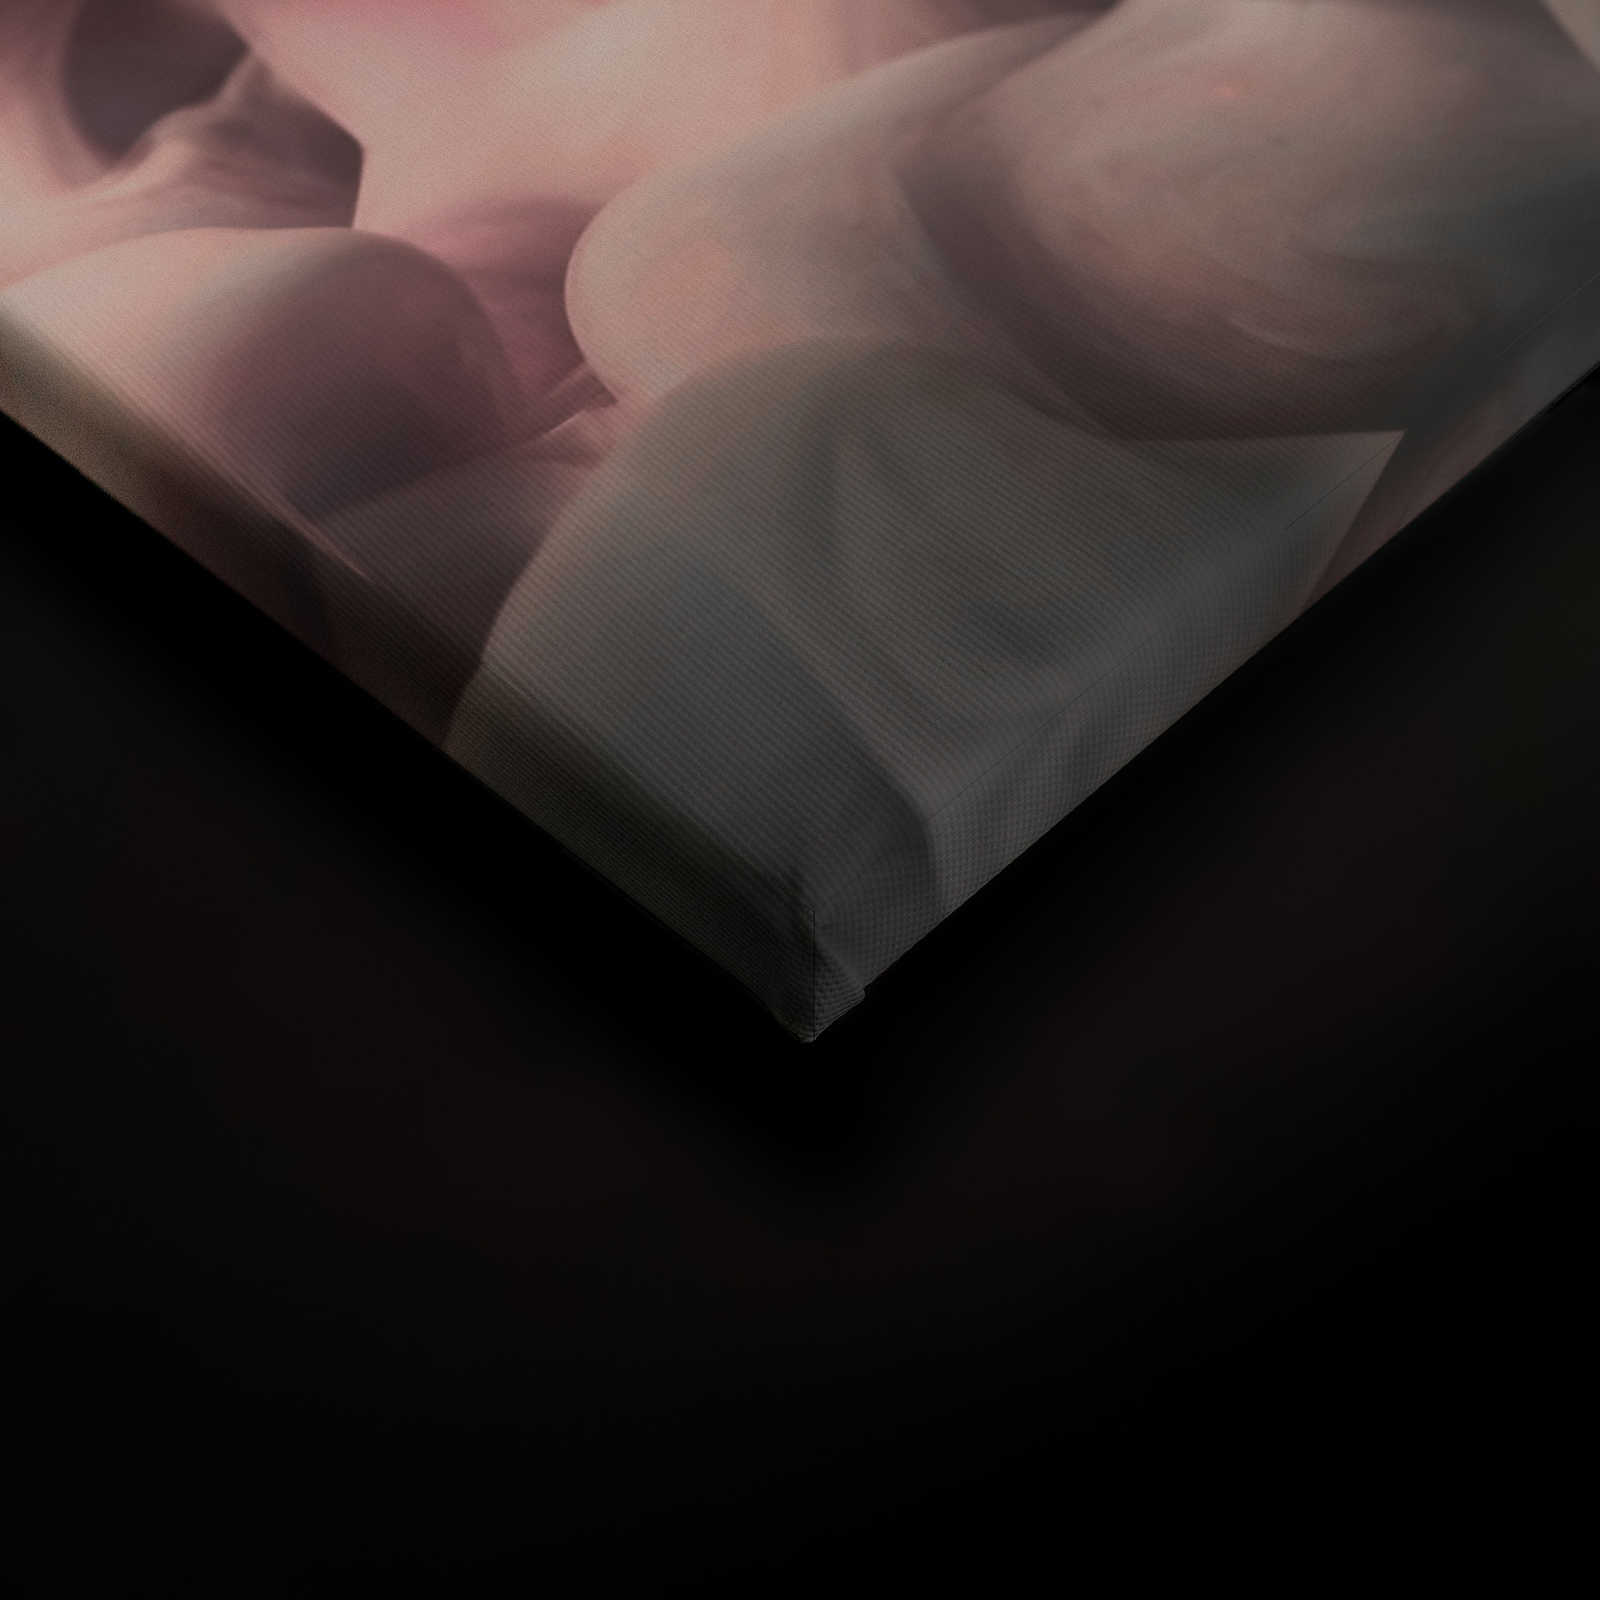             Lienzo ahumado de color | Rosa, gris, blanco - 0,90 m x 0,60 m
        